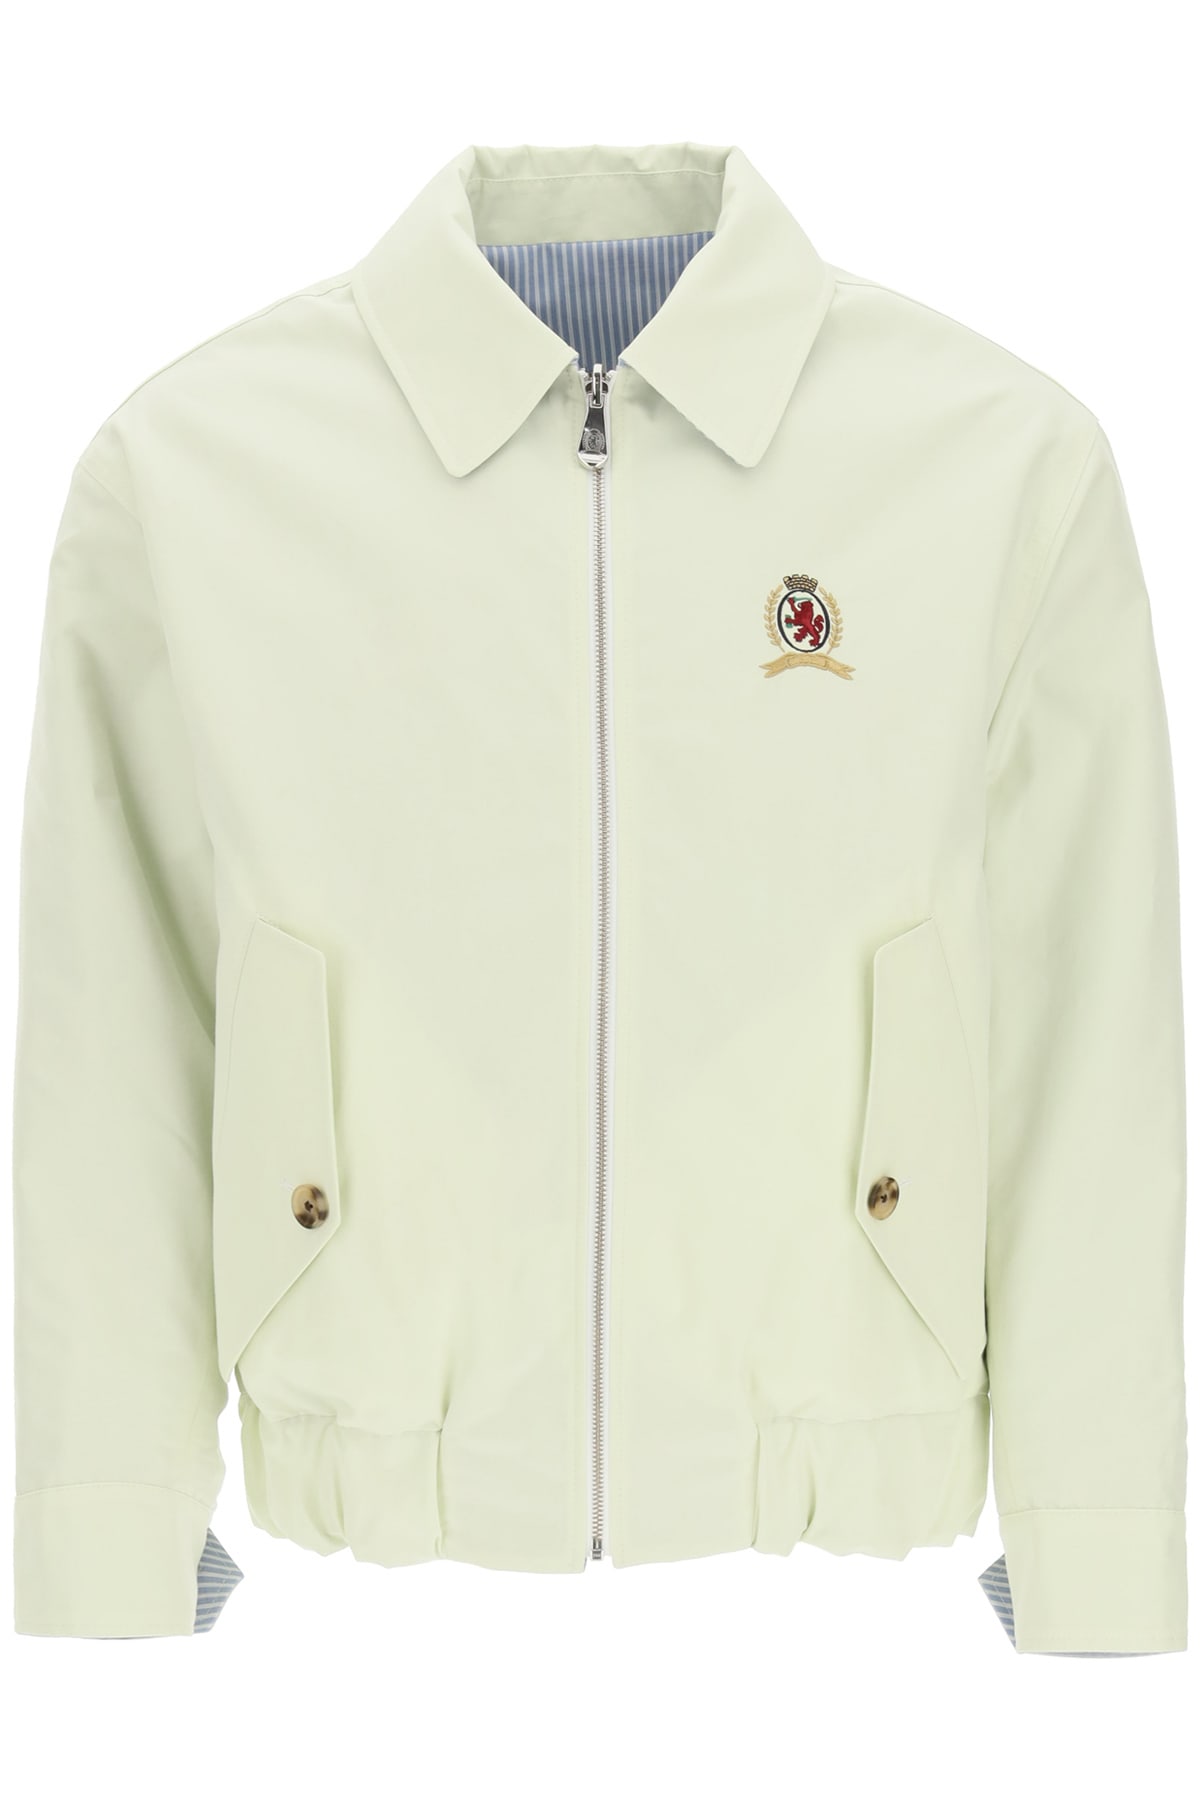 Tommy Hilfiger Reversible Jacket With Crest